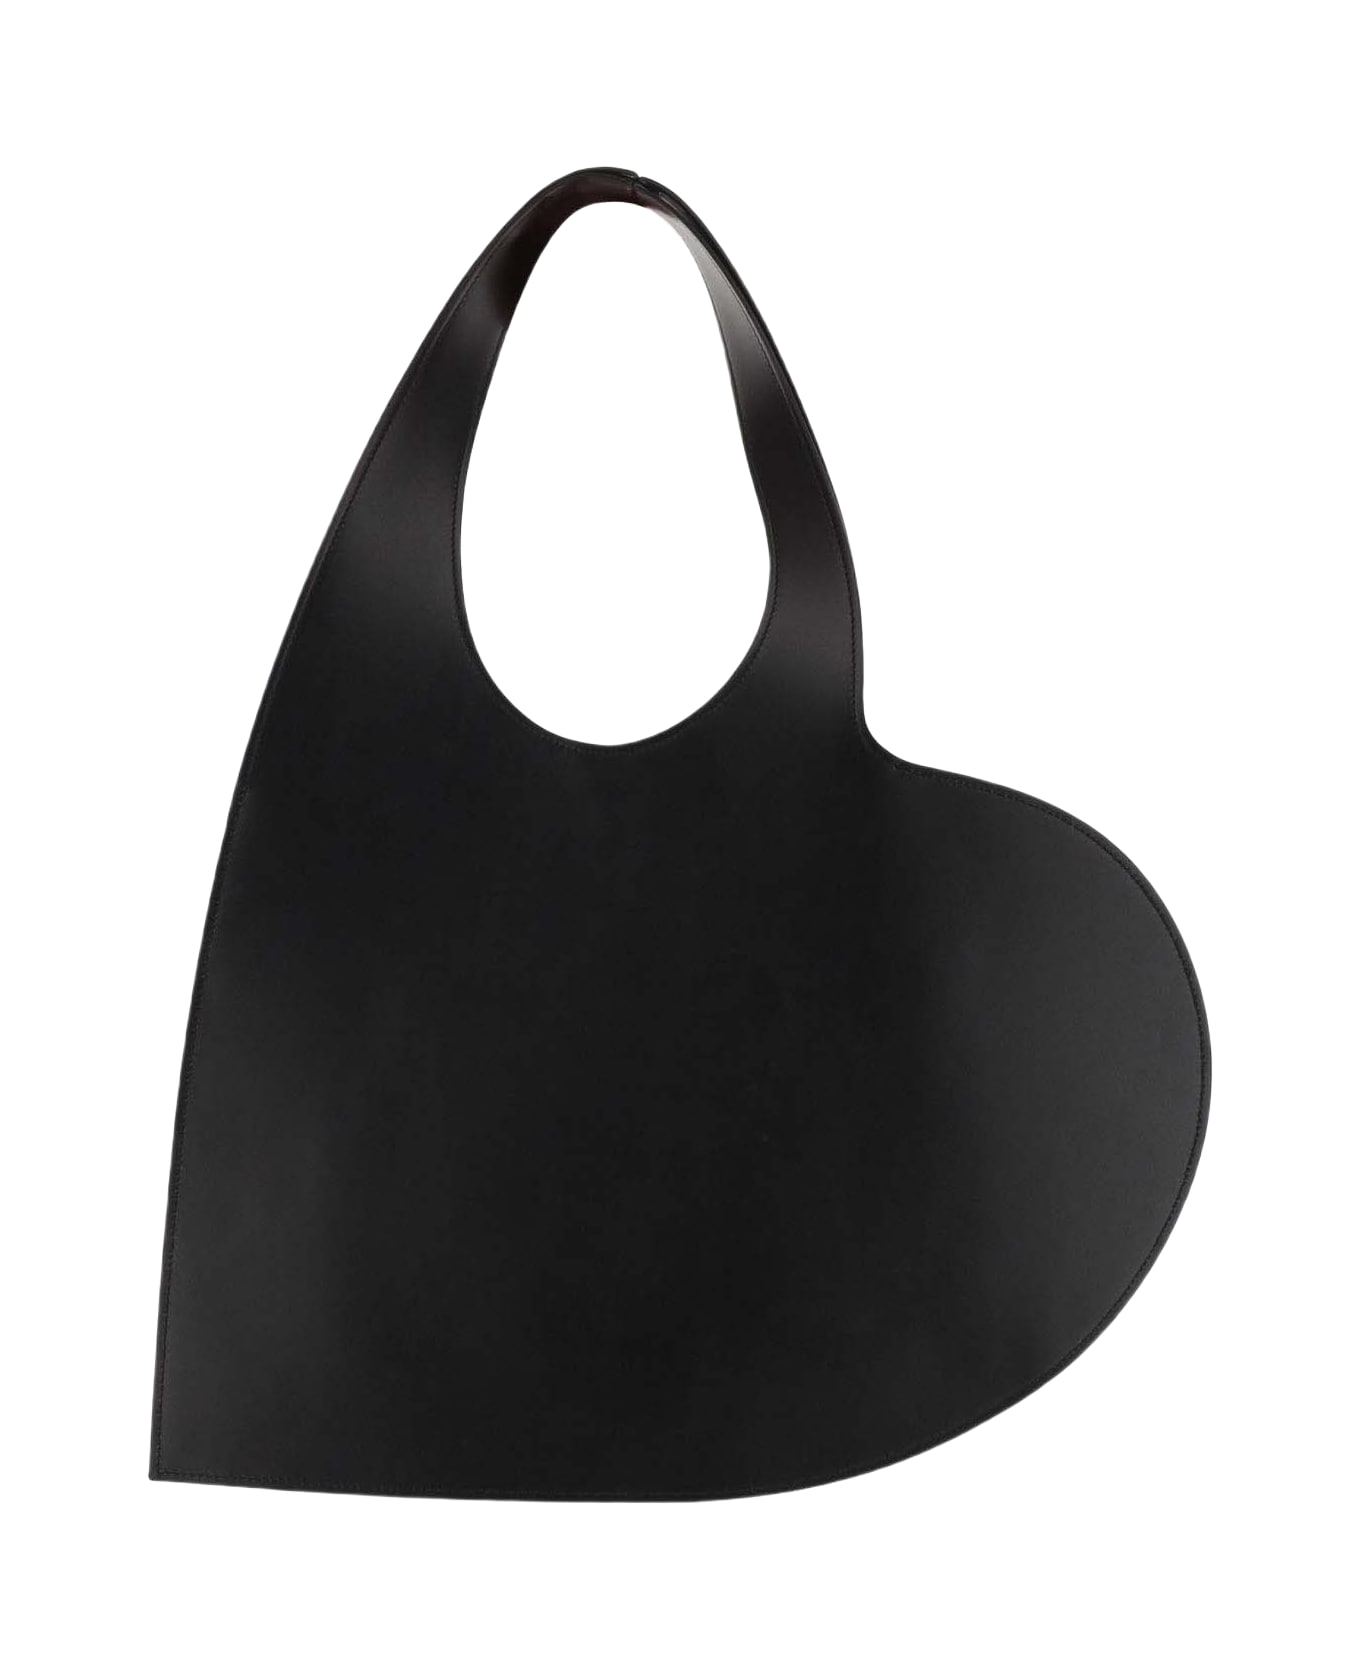 Coperni Heart Tote Bag - Black